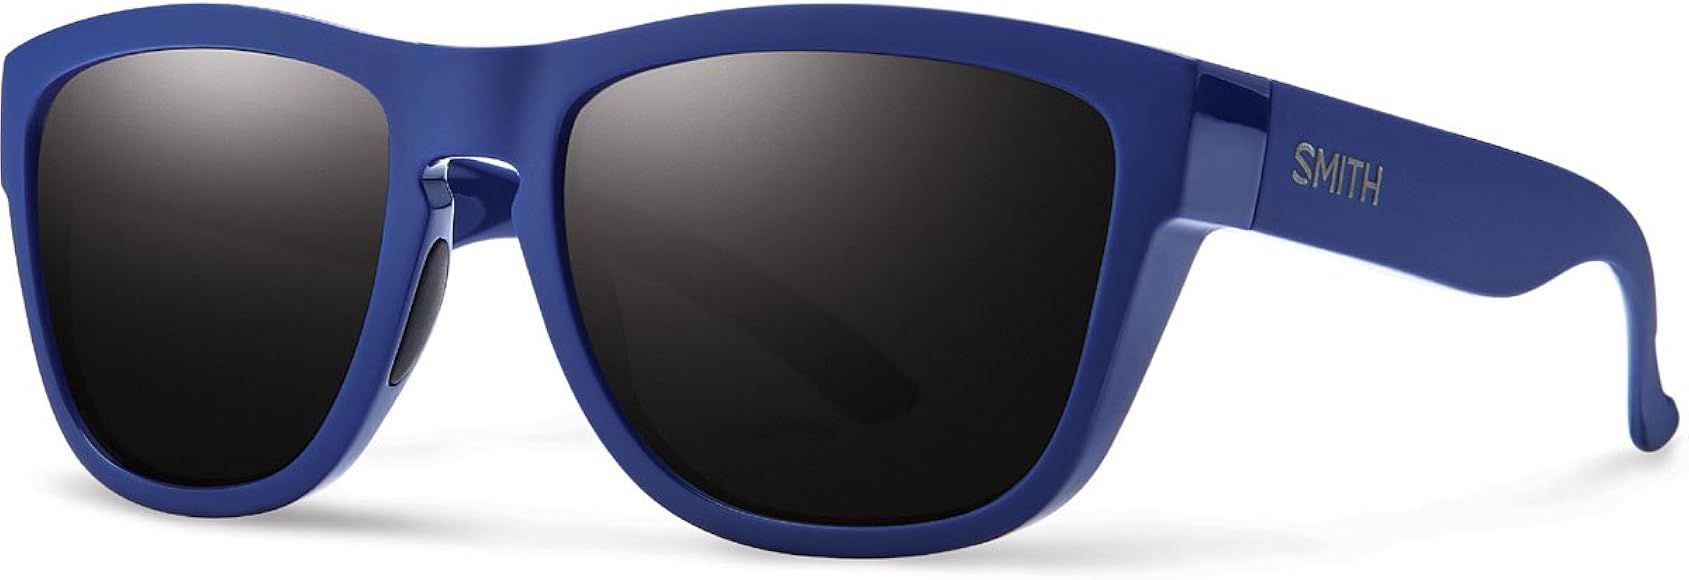 Smith Optics Adult Clark Lifestyle Sunglasses/Eyewear, Matte Blue/Blackout, Medium | Amazon (US)